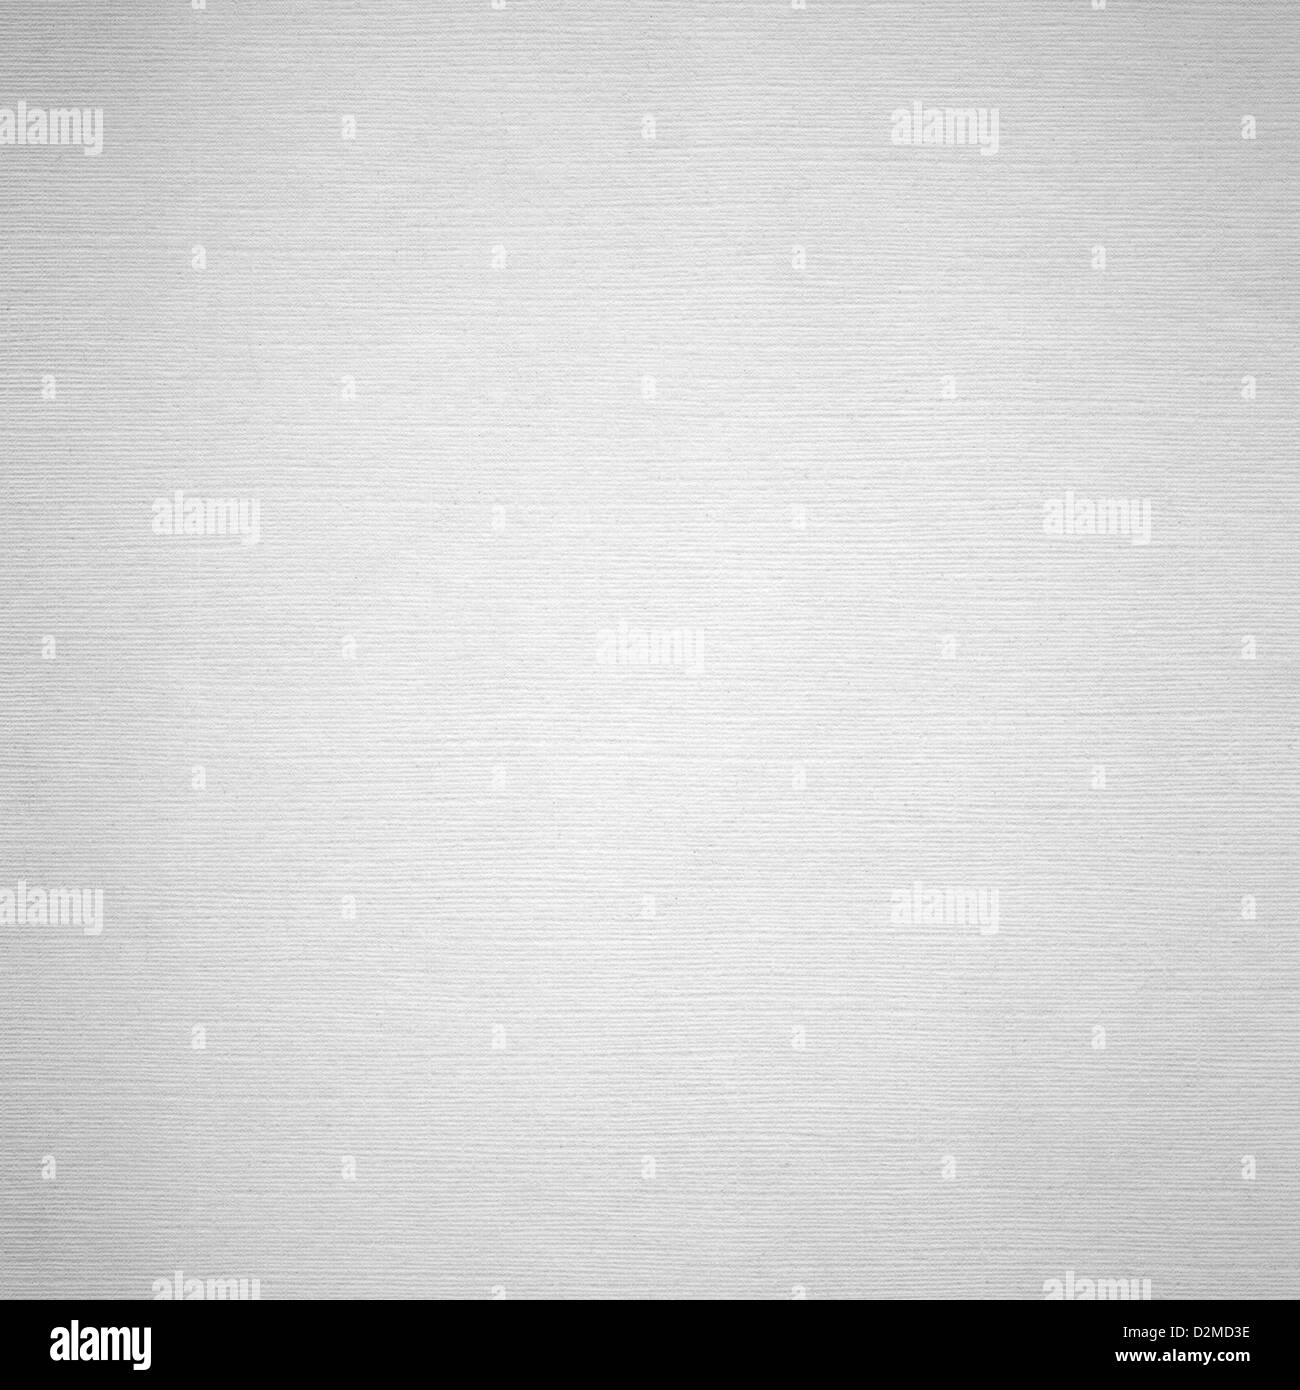 White paper texture Stock Photo - Alamy